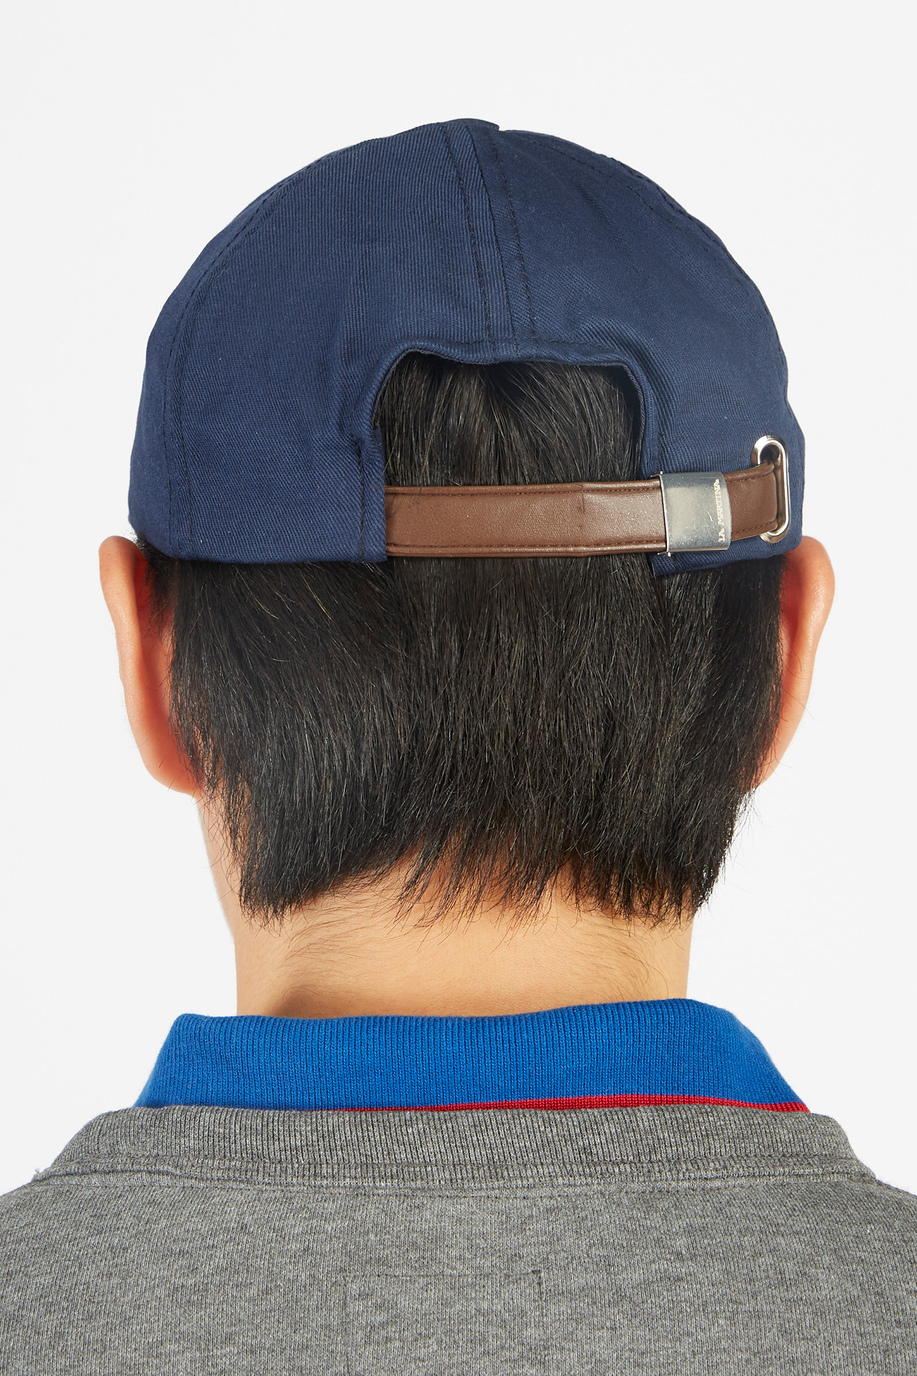 Unisex baseball cap with adjustable regular fit closure - Accessories | La Martina - Official Online Shop